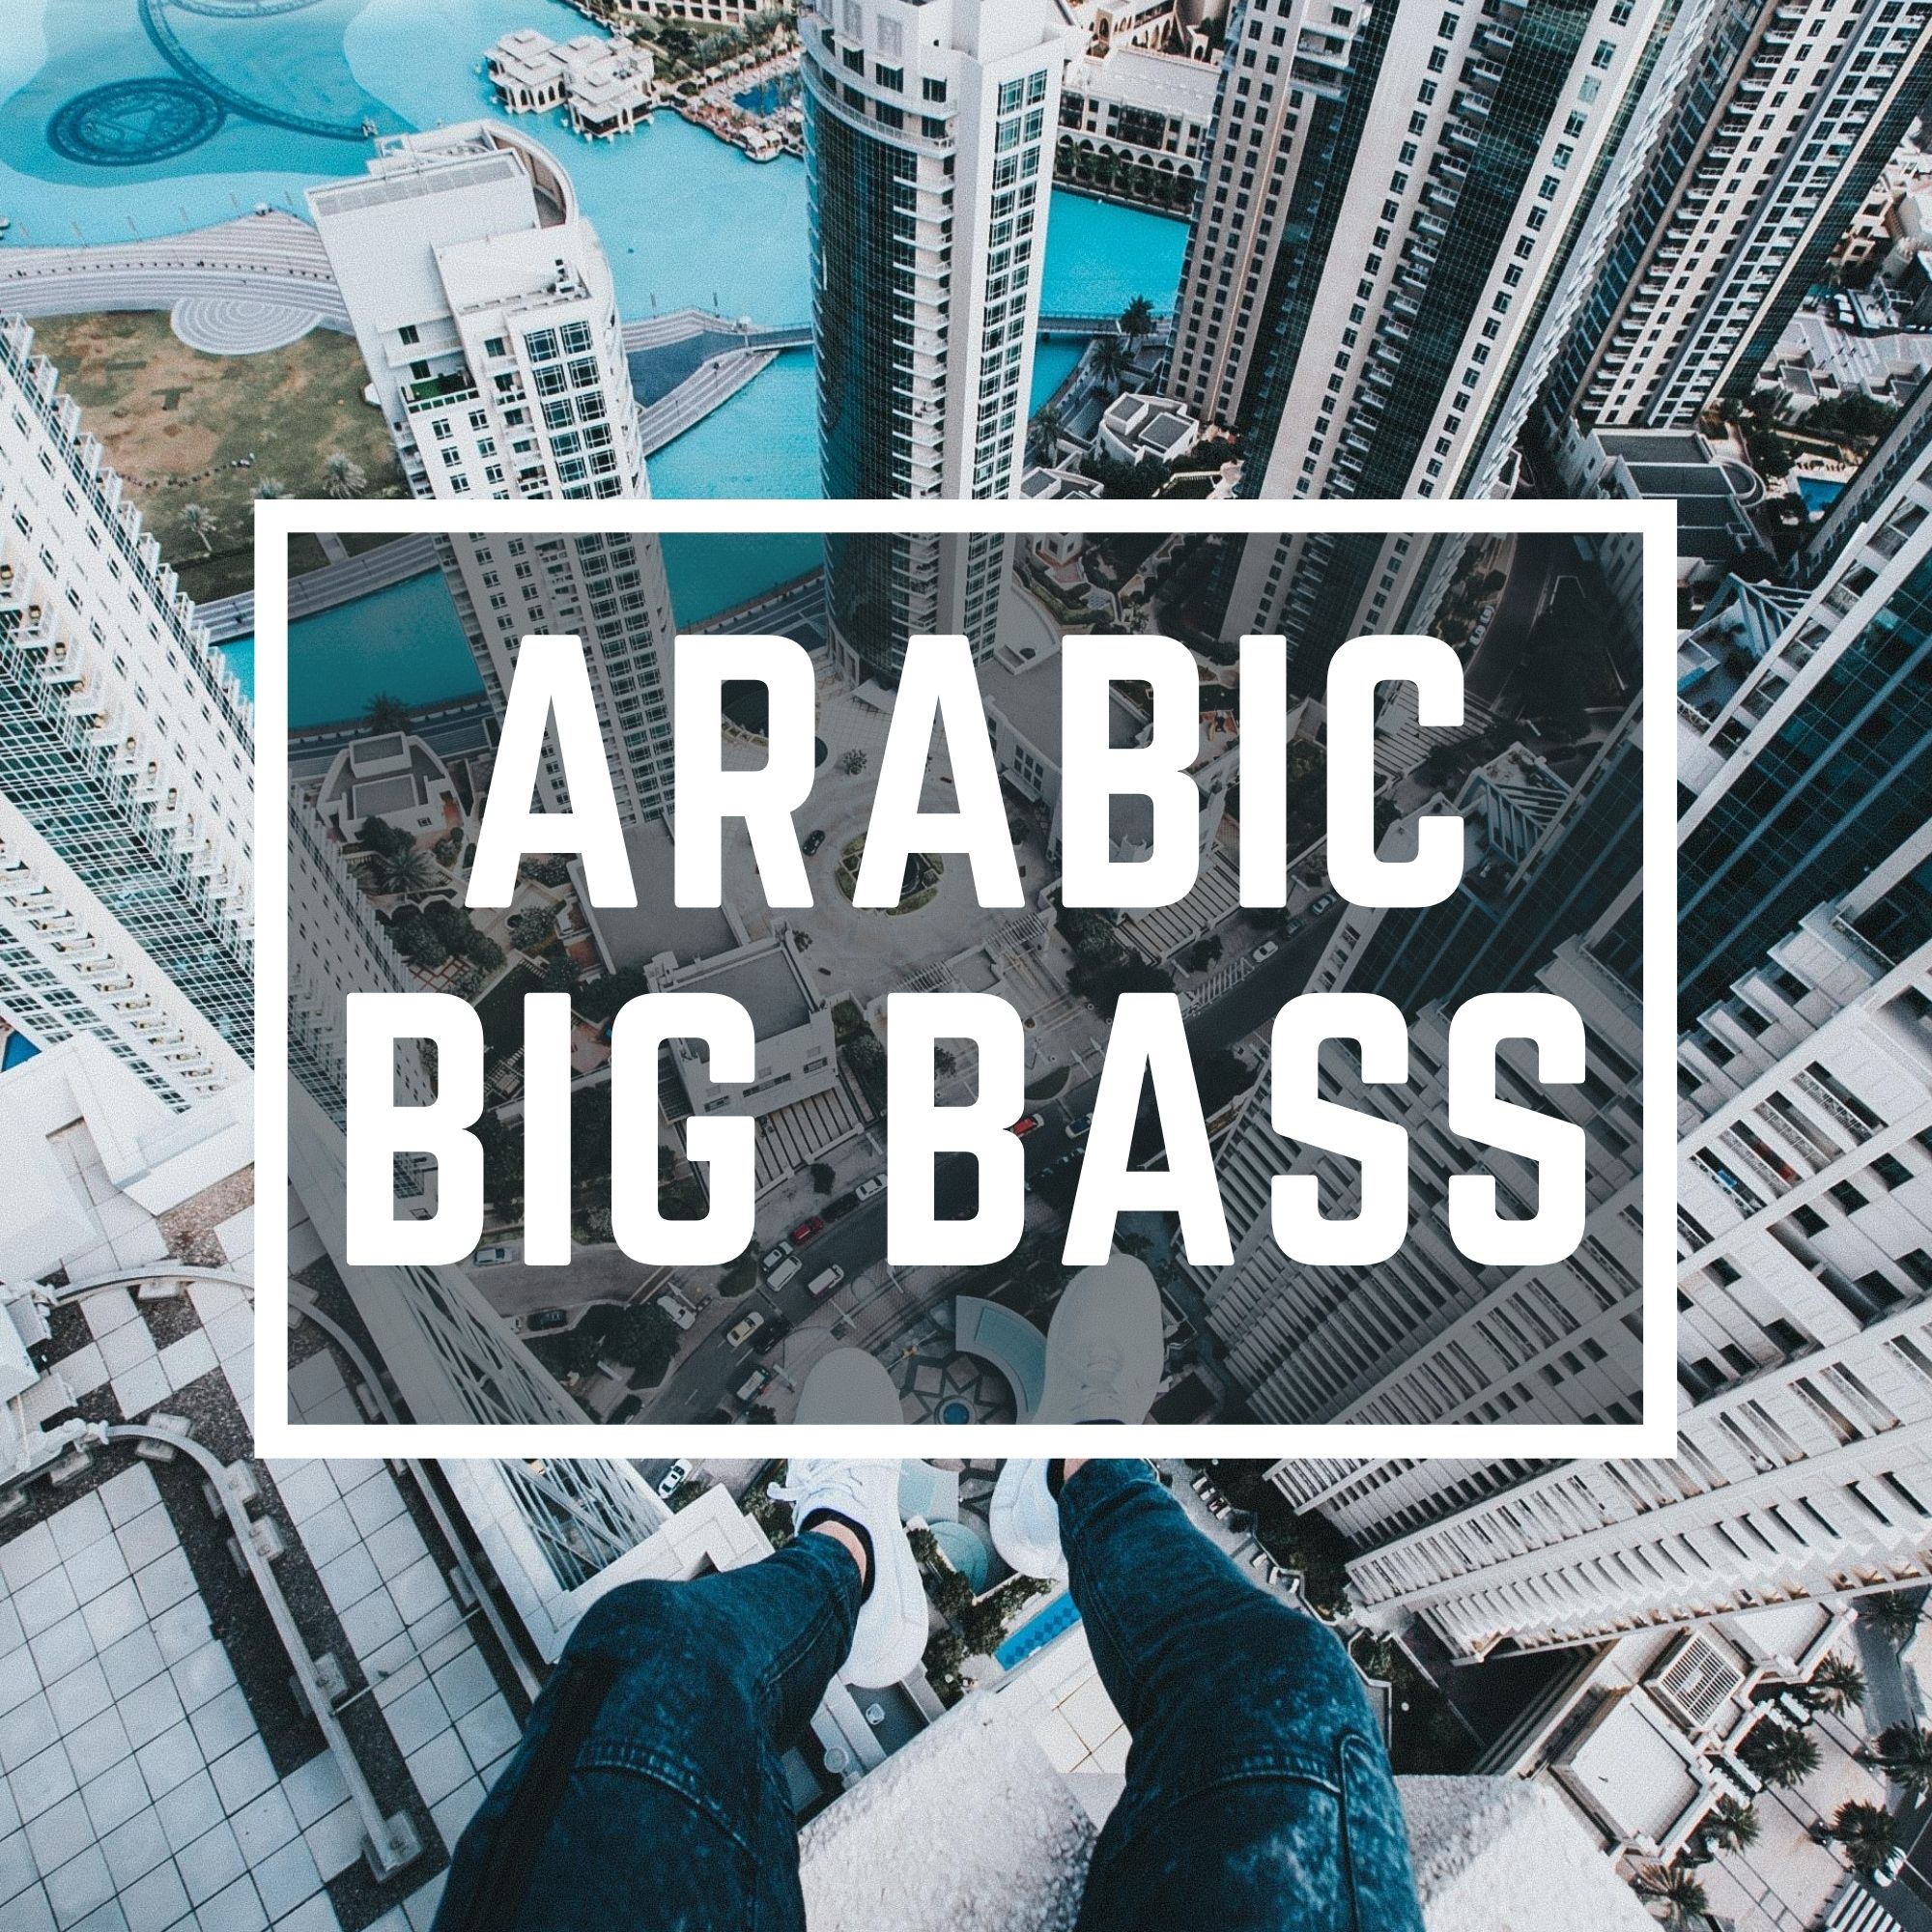 Arabic Big Bass